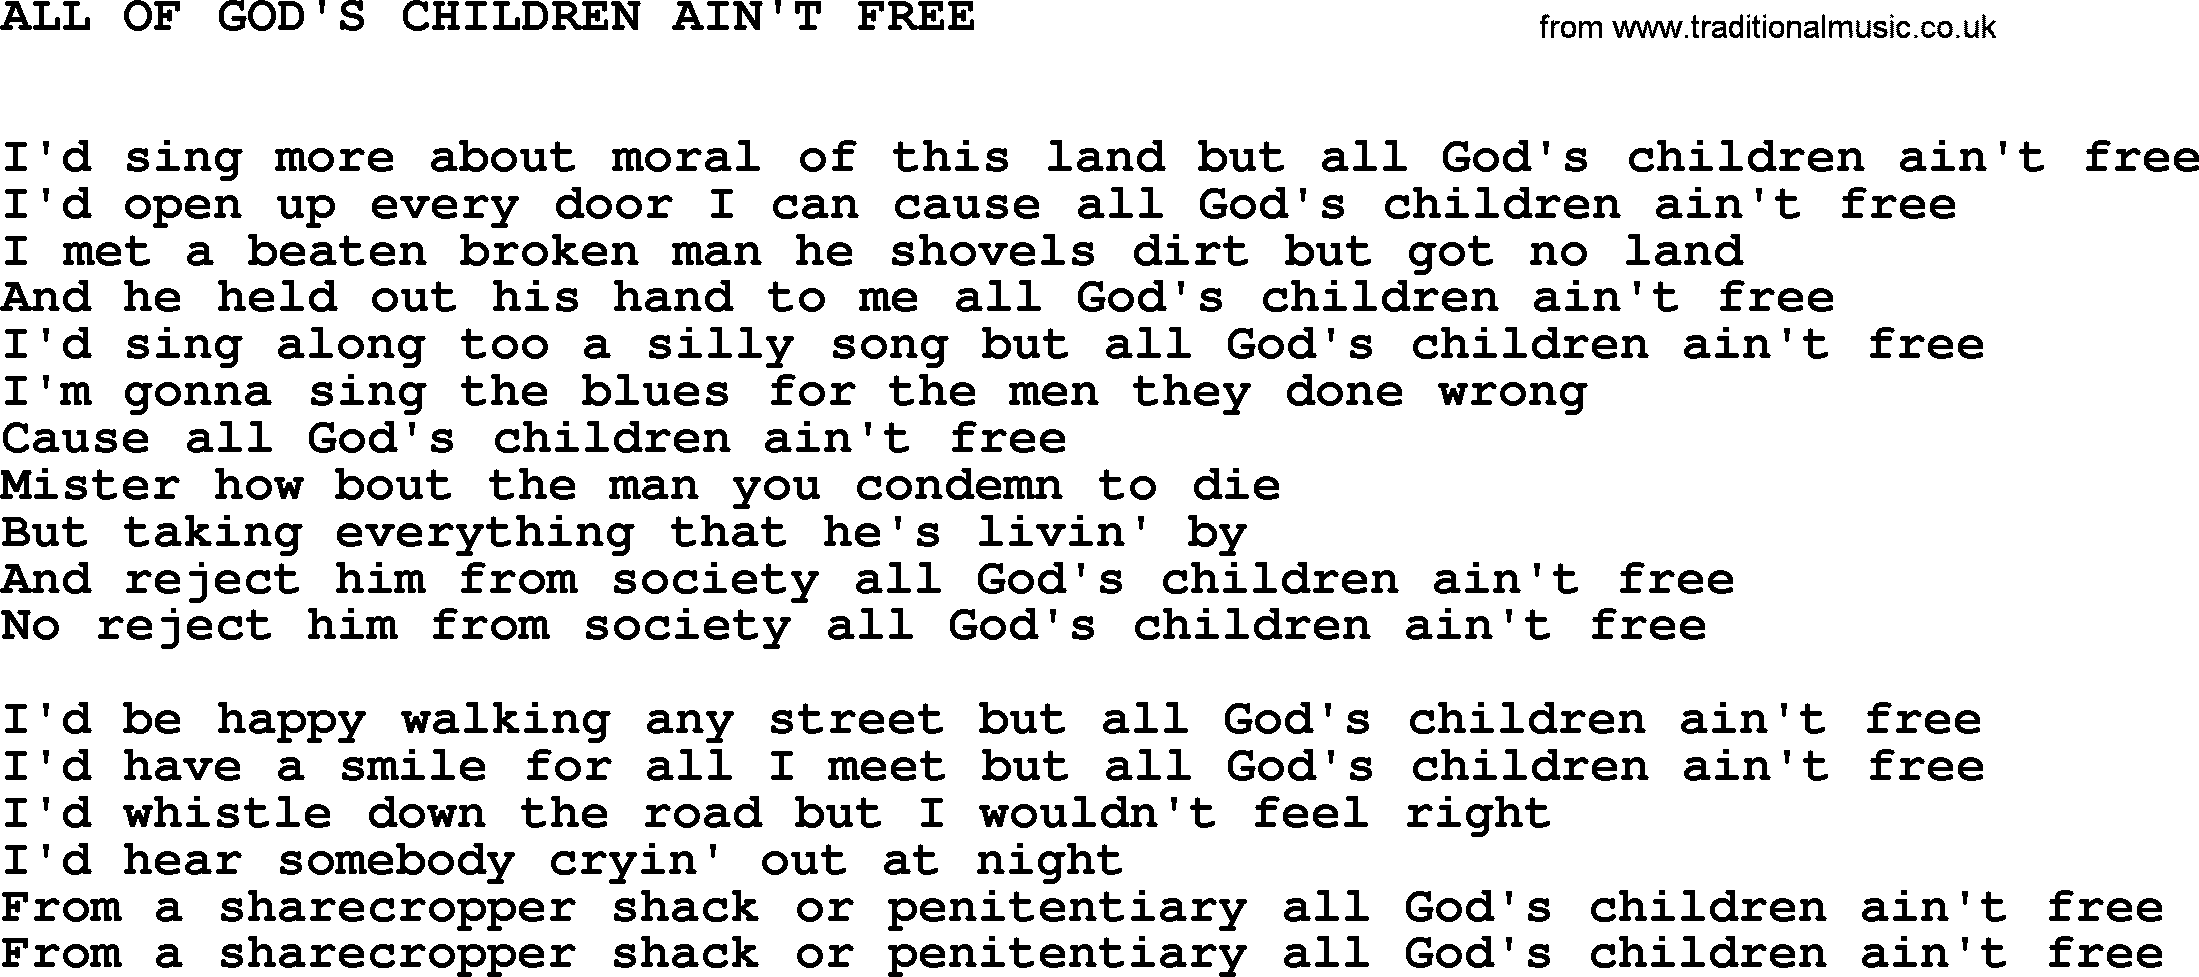 Johnny Cash song All Of God's Children Ain't Free.txt lyrics